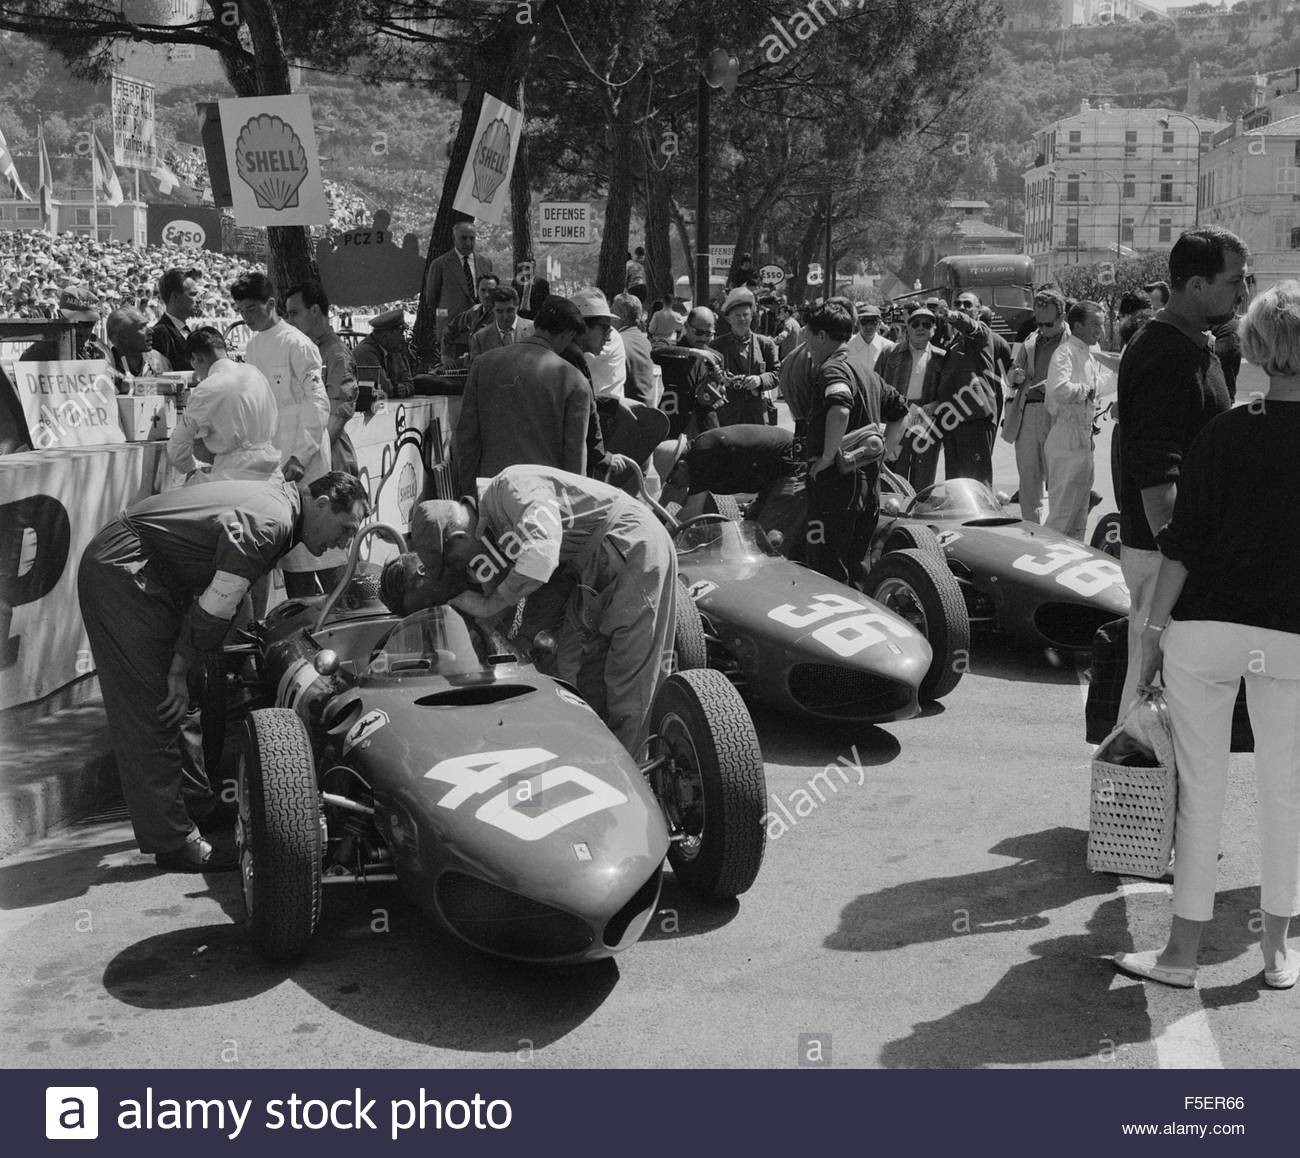 Ferrari 156 Sharknose in pits at 1961 Monaco Grand Prix.